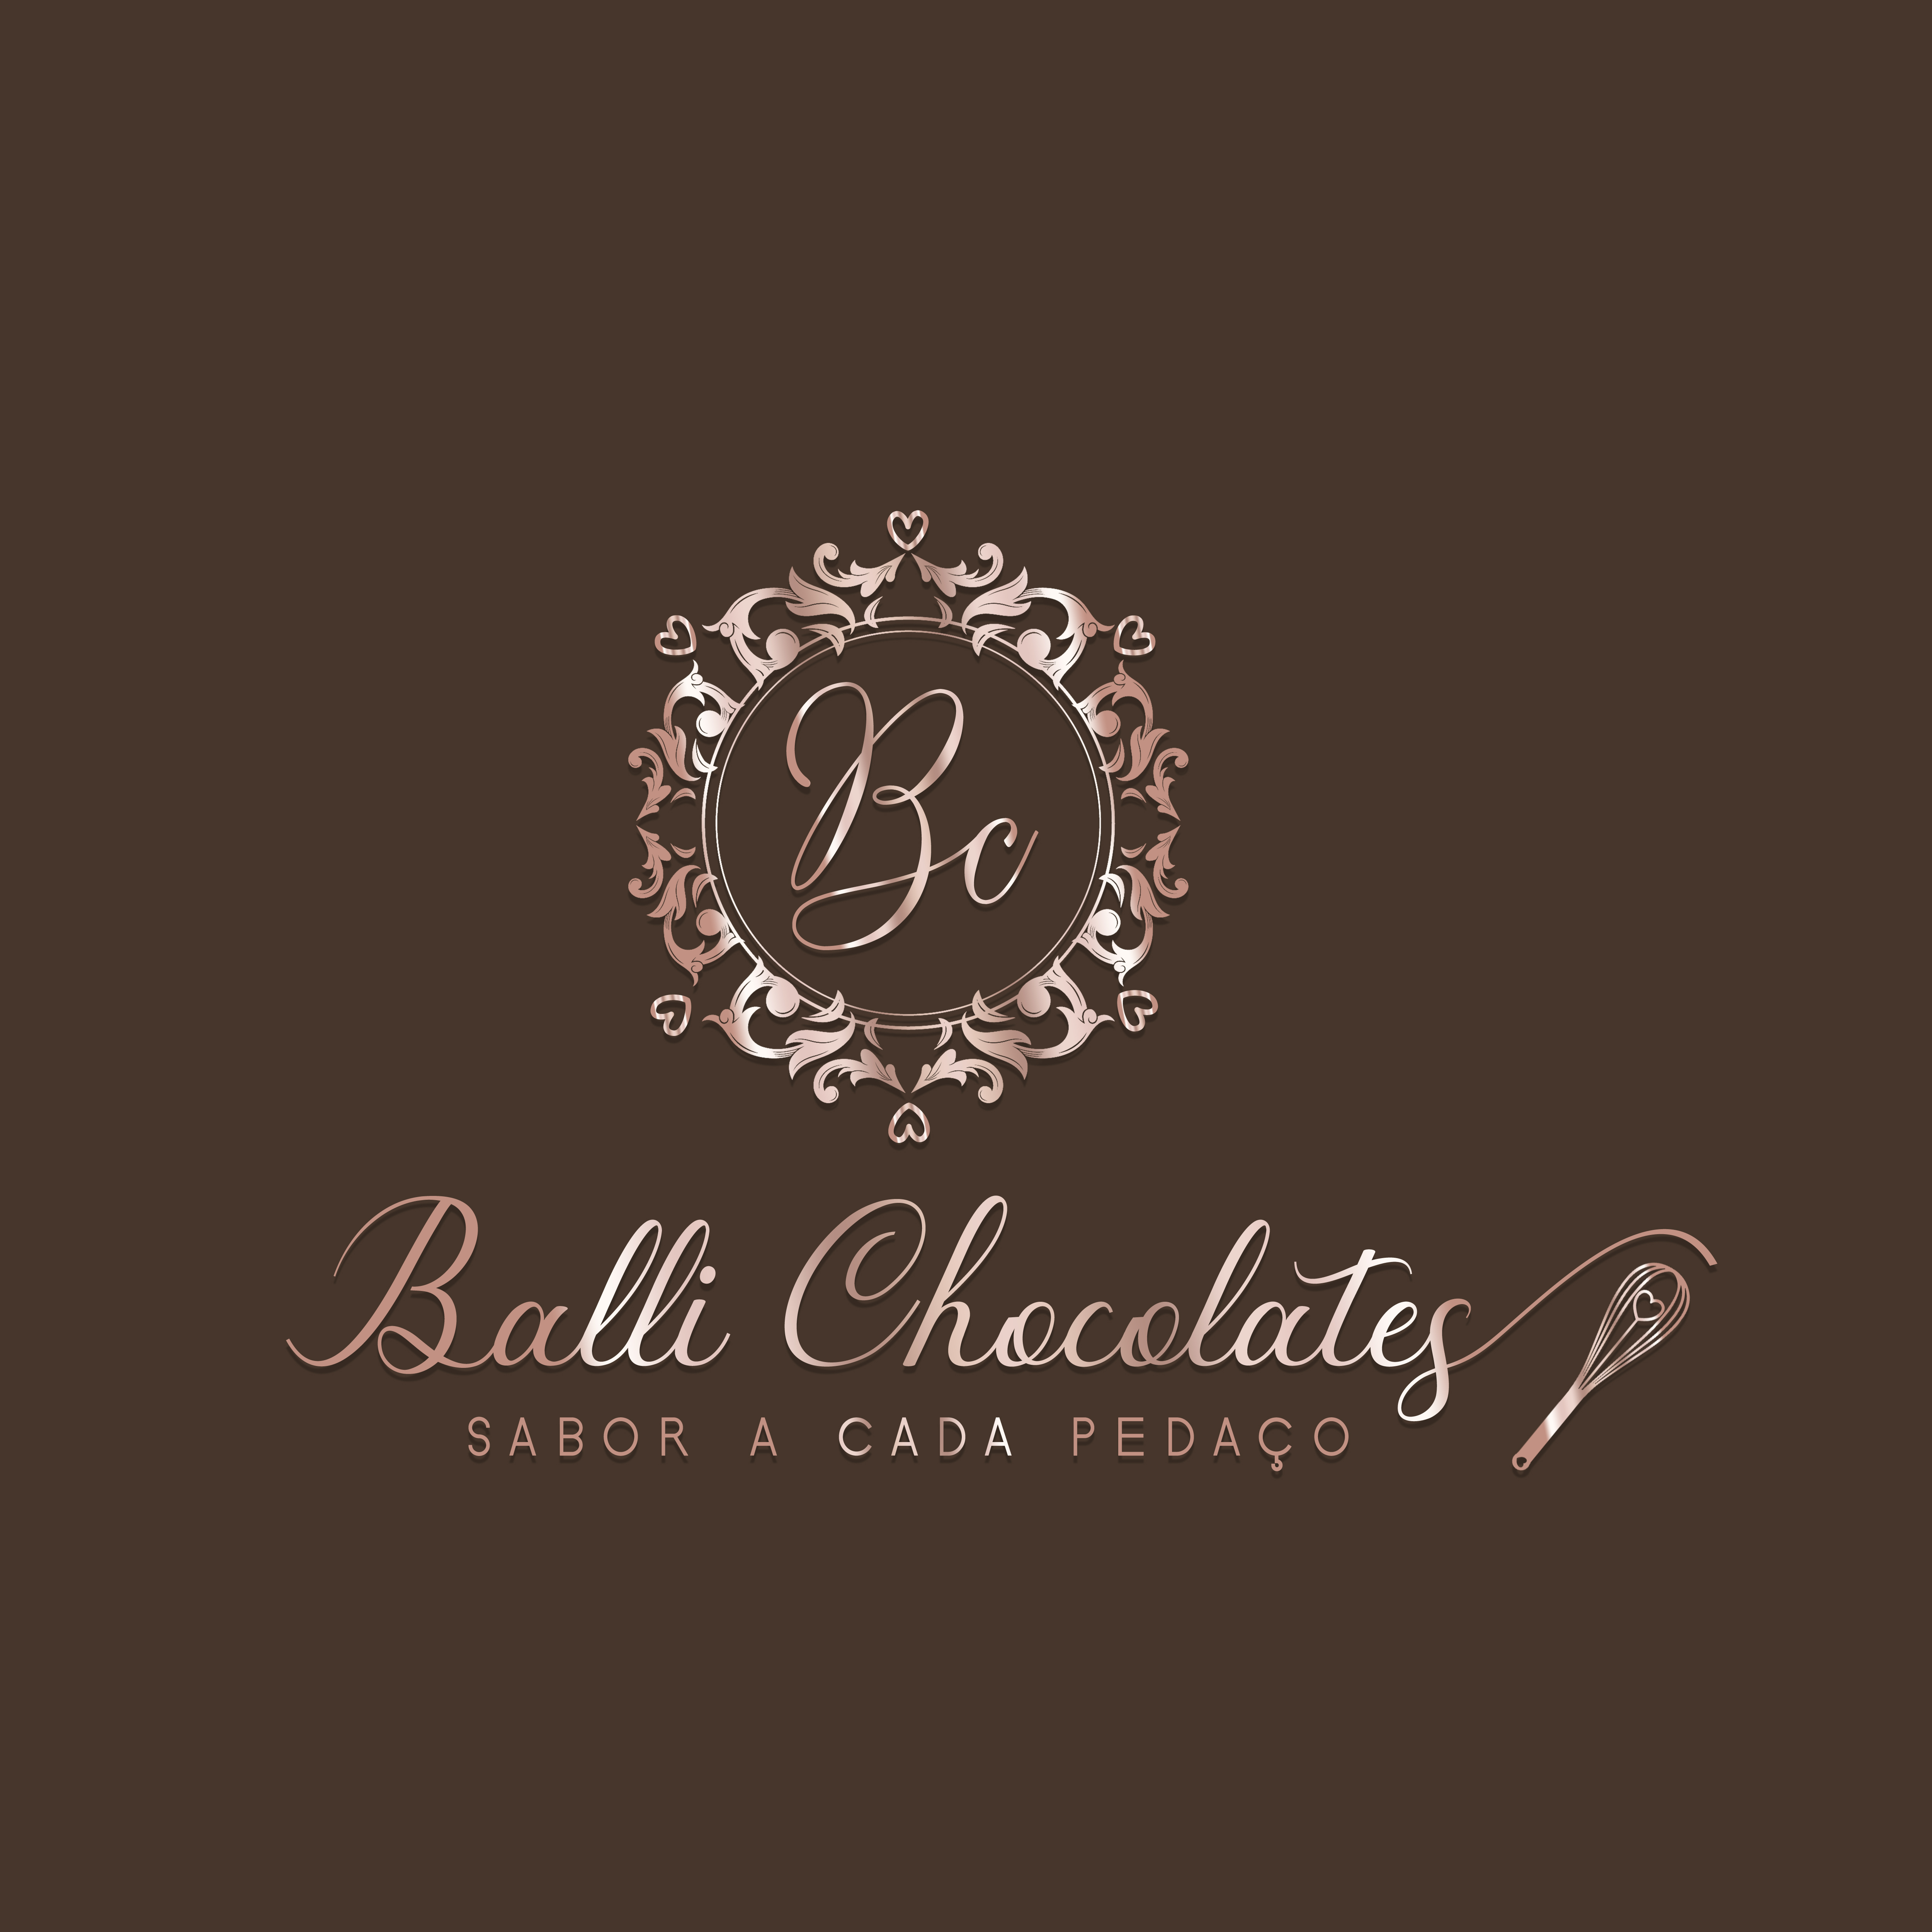 BALLI CHOCOLATES